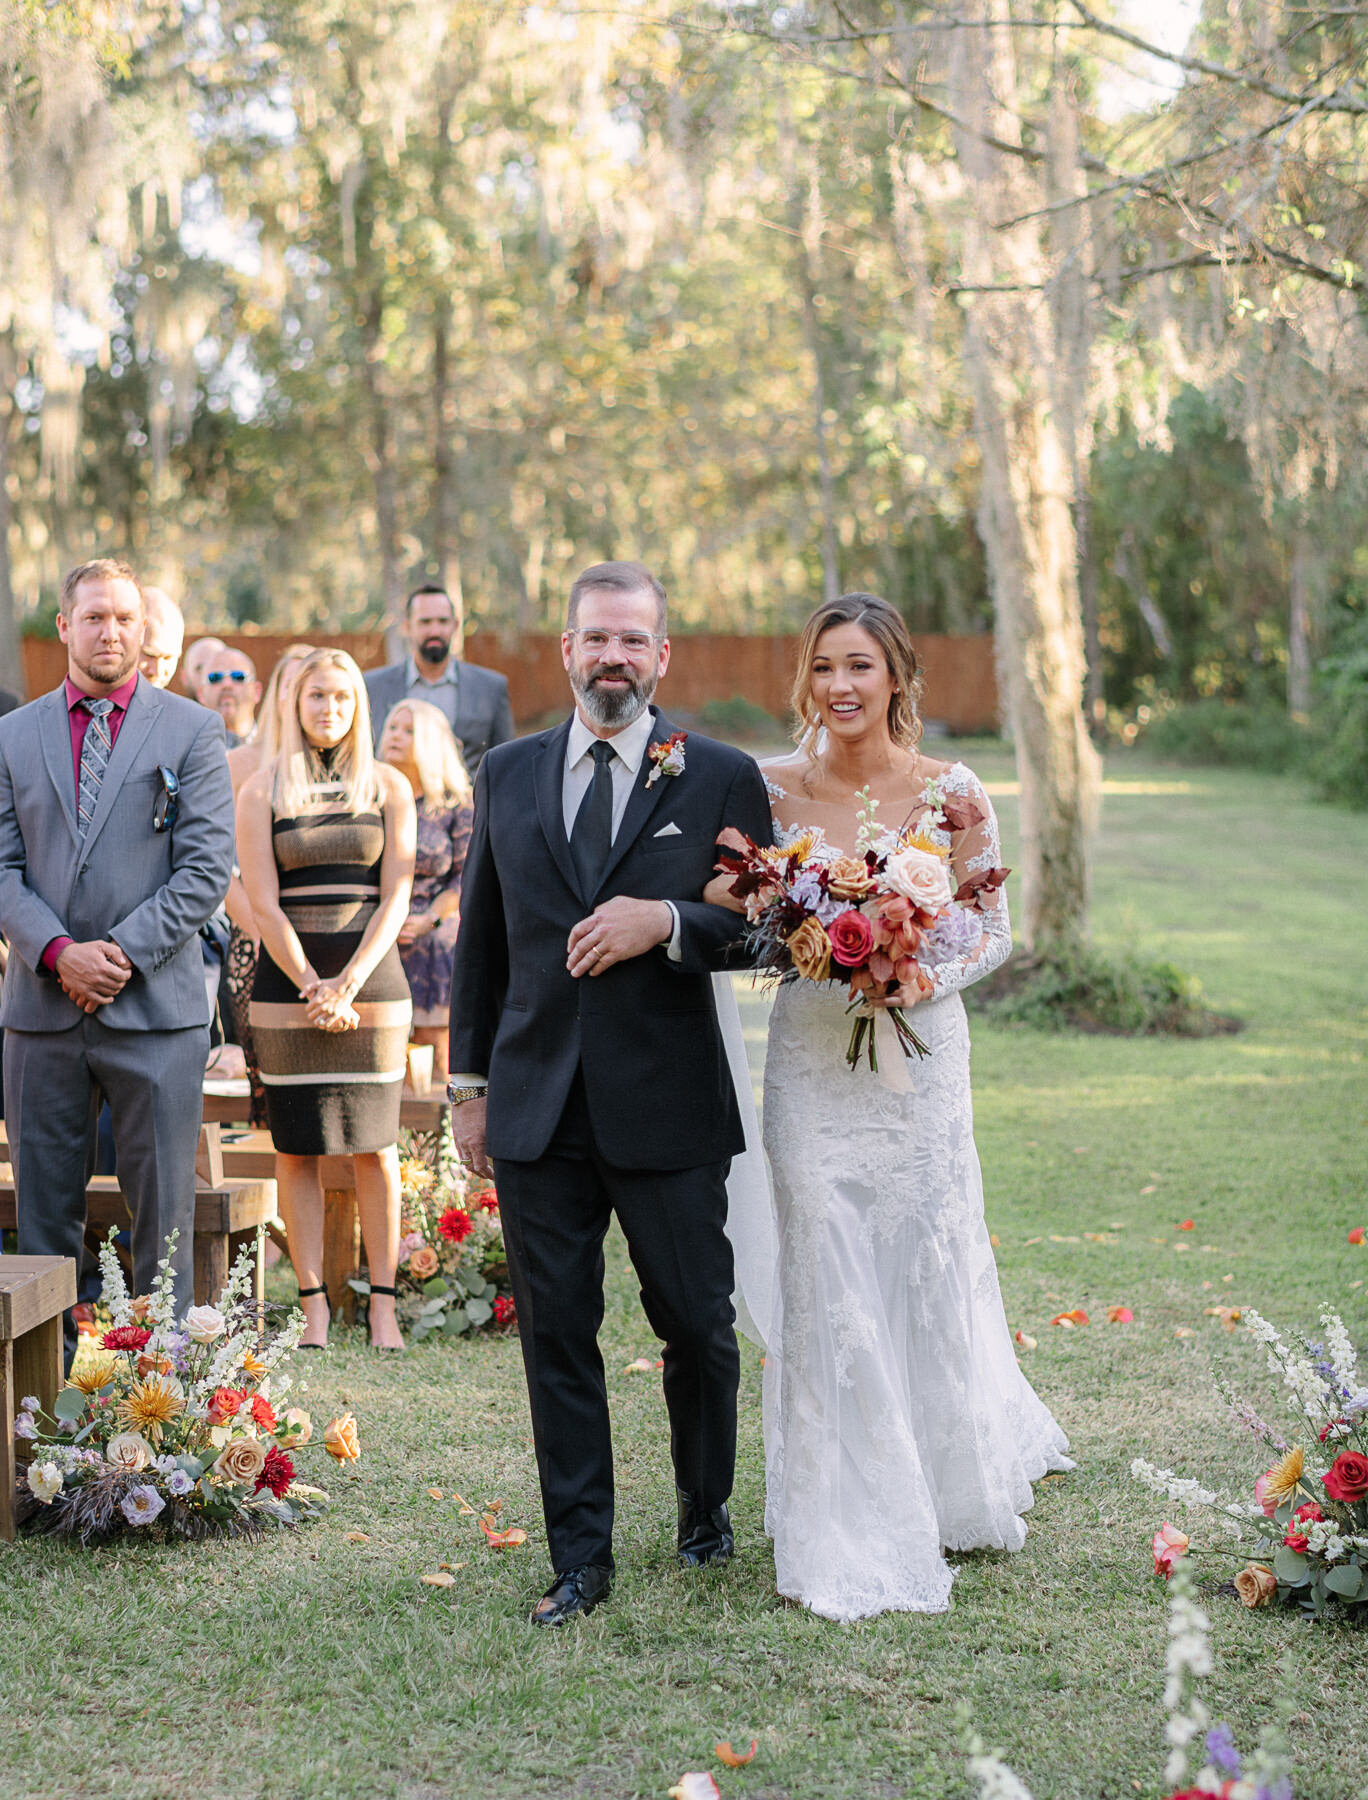 Florida Boho Wedding at a White Barn